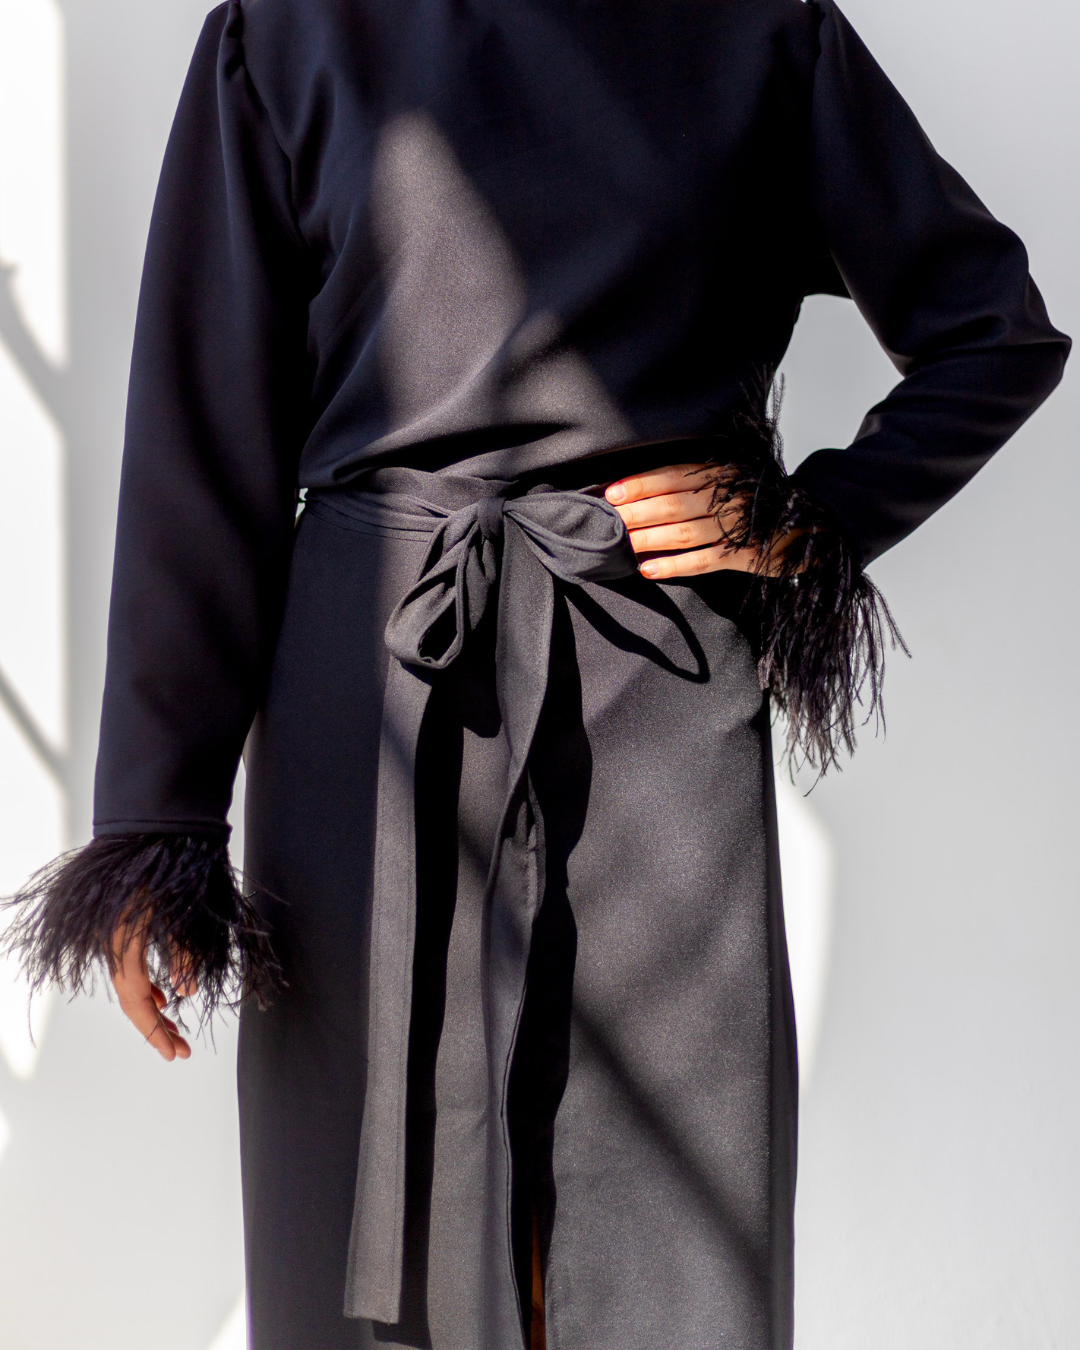 Midi Skirt | Black